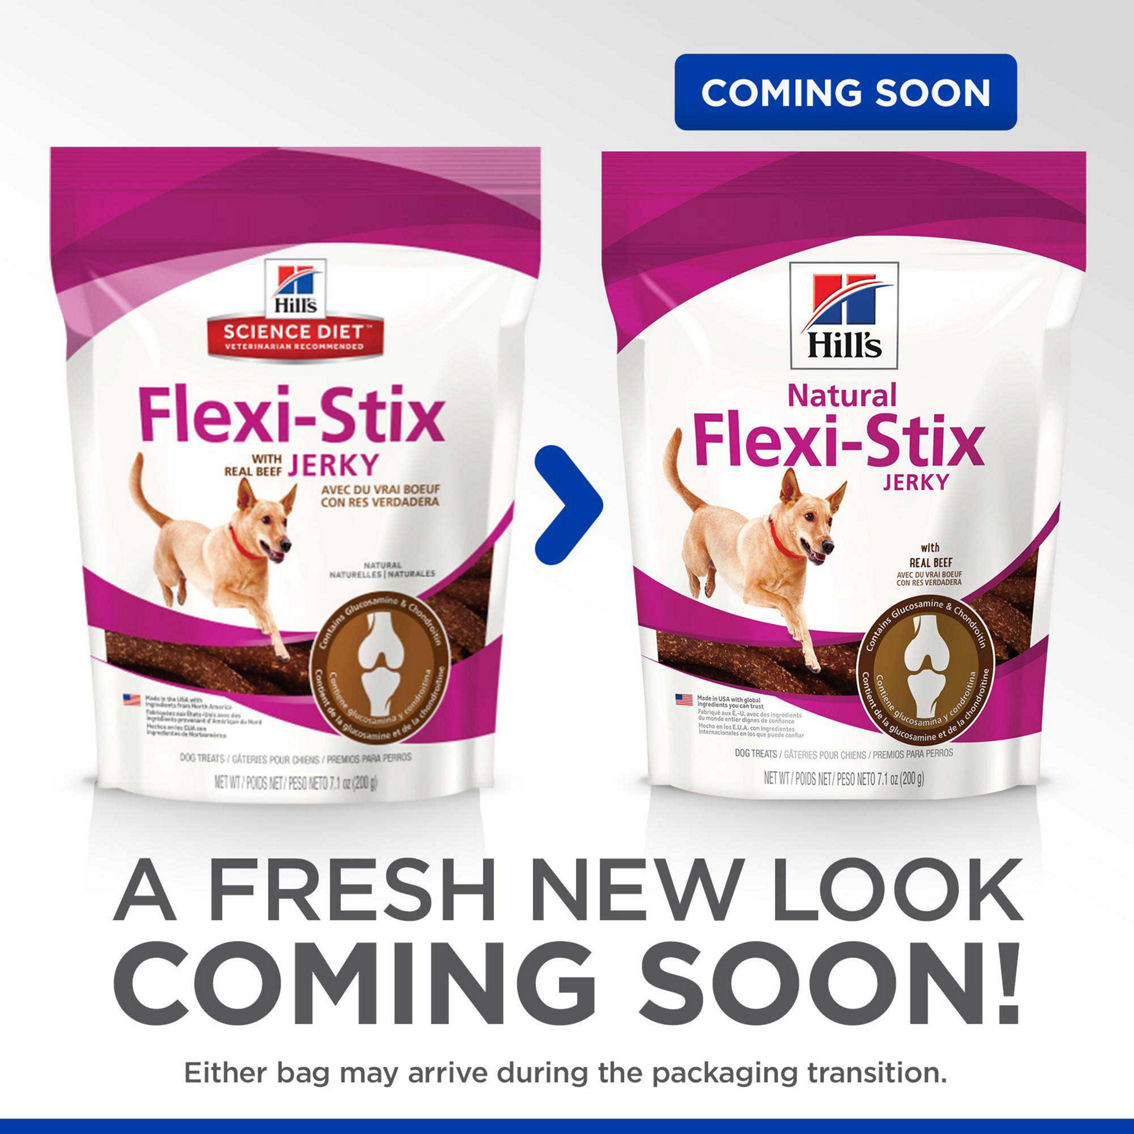 Hill's Science Diet Flexi-Stix Turkey Jerky Dog Treats 7.1 oz. - Image 2 of 2